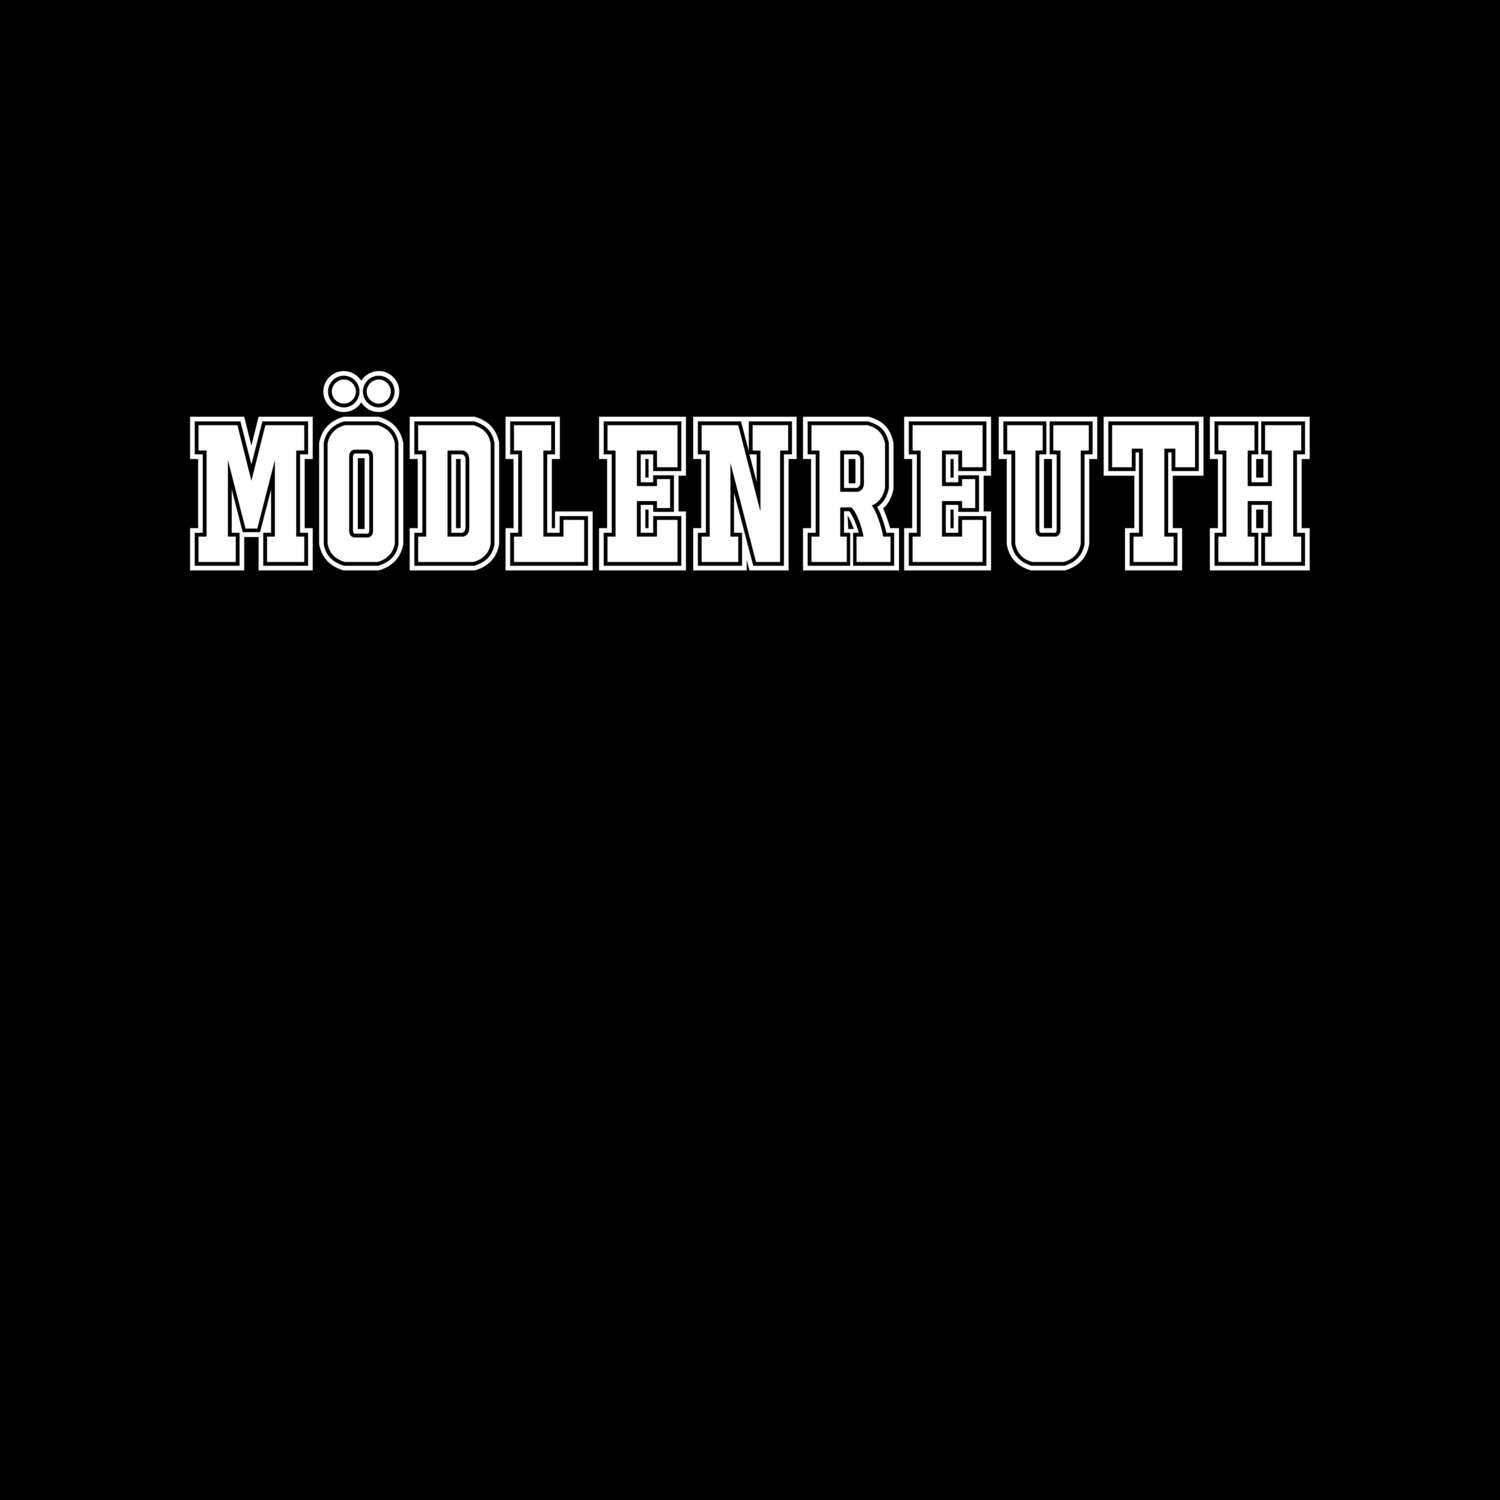 Mödlenreuth T-Shirt »Classic«